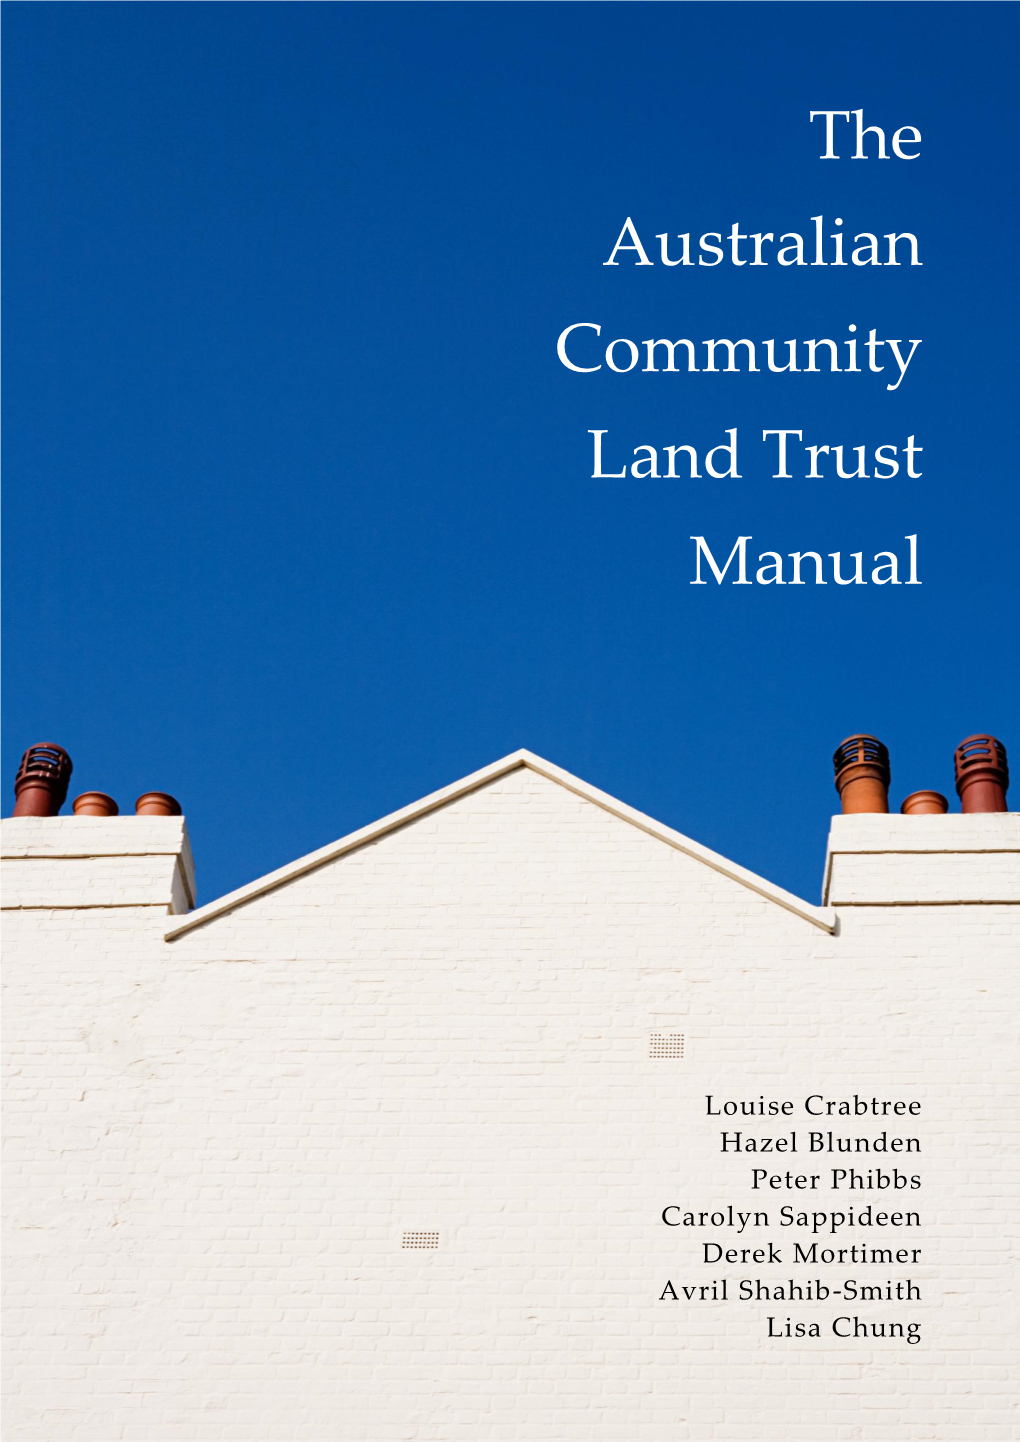 The Australian Community Land Trust Manual